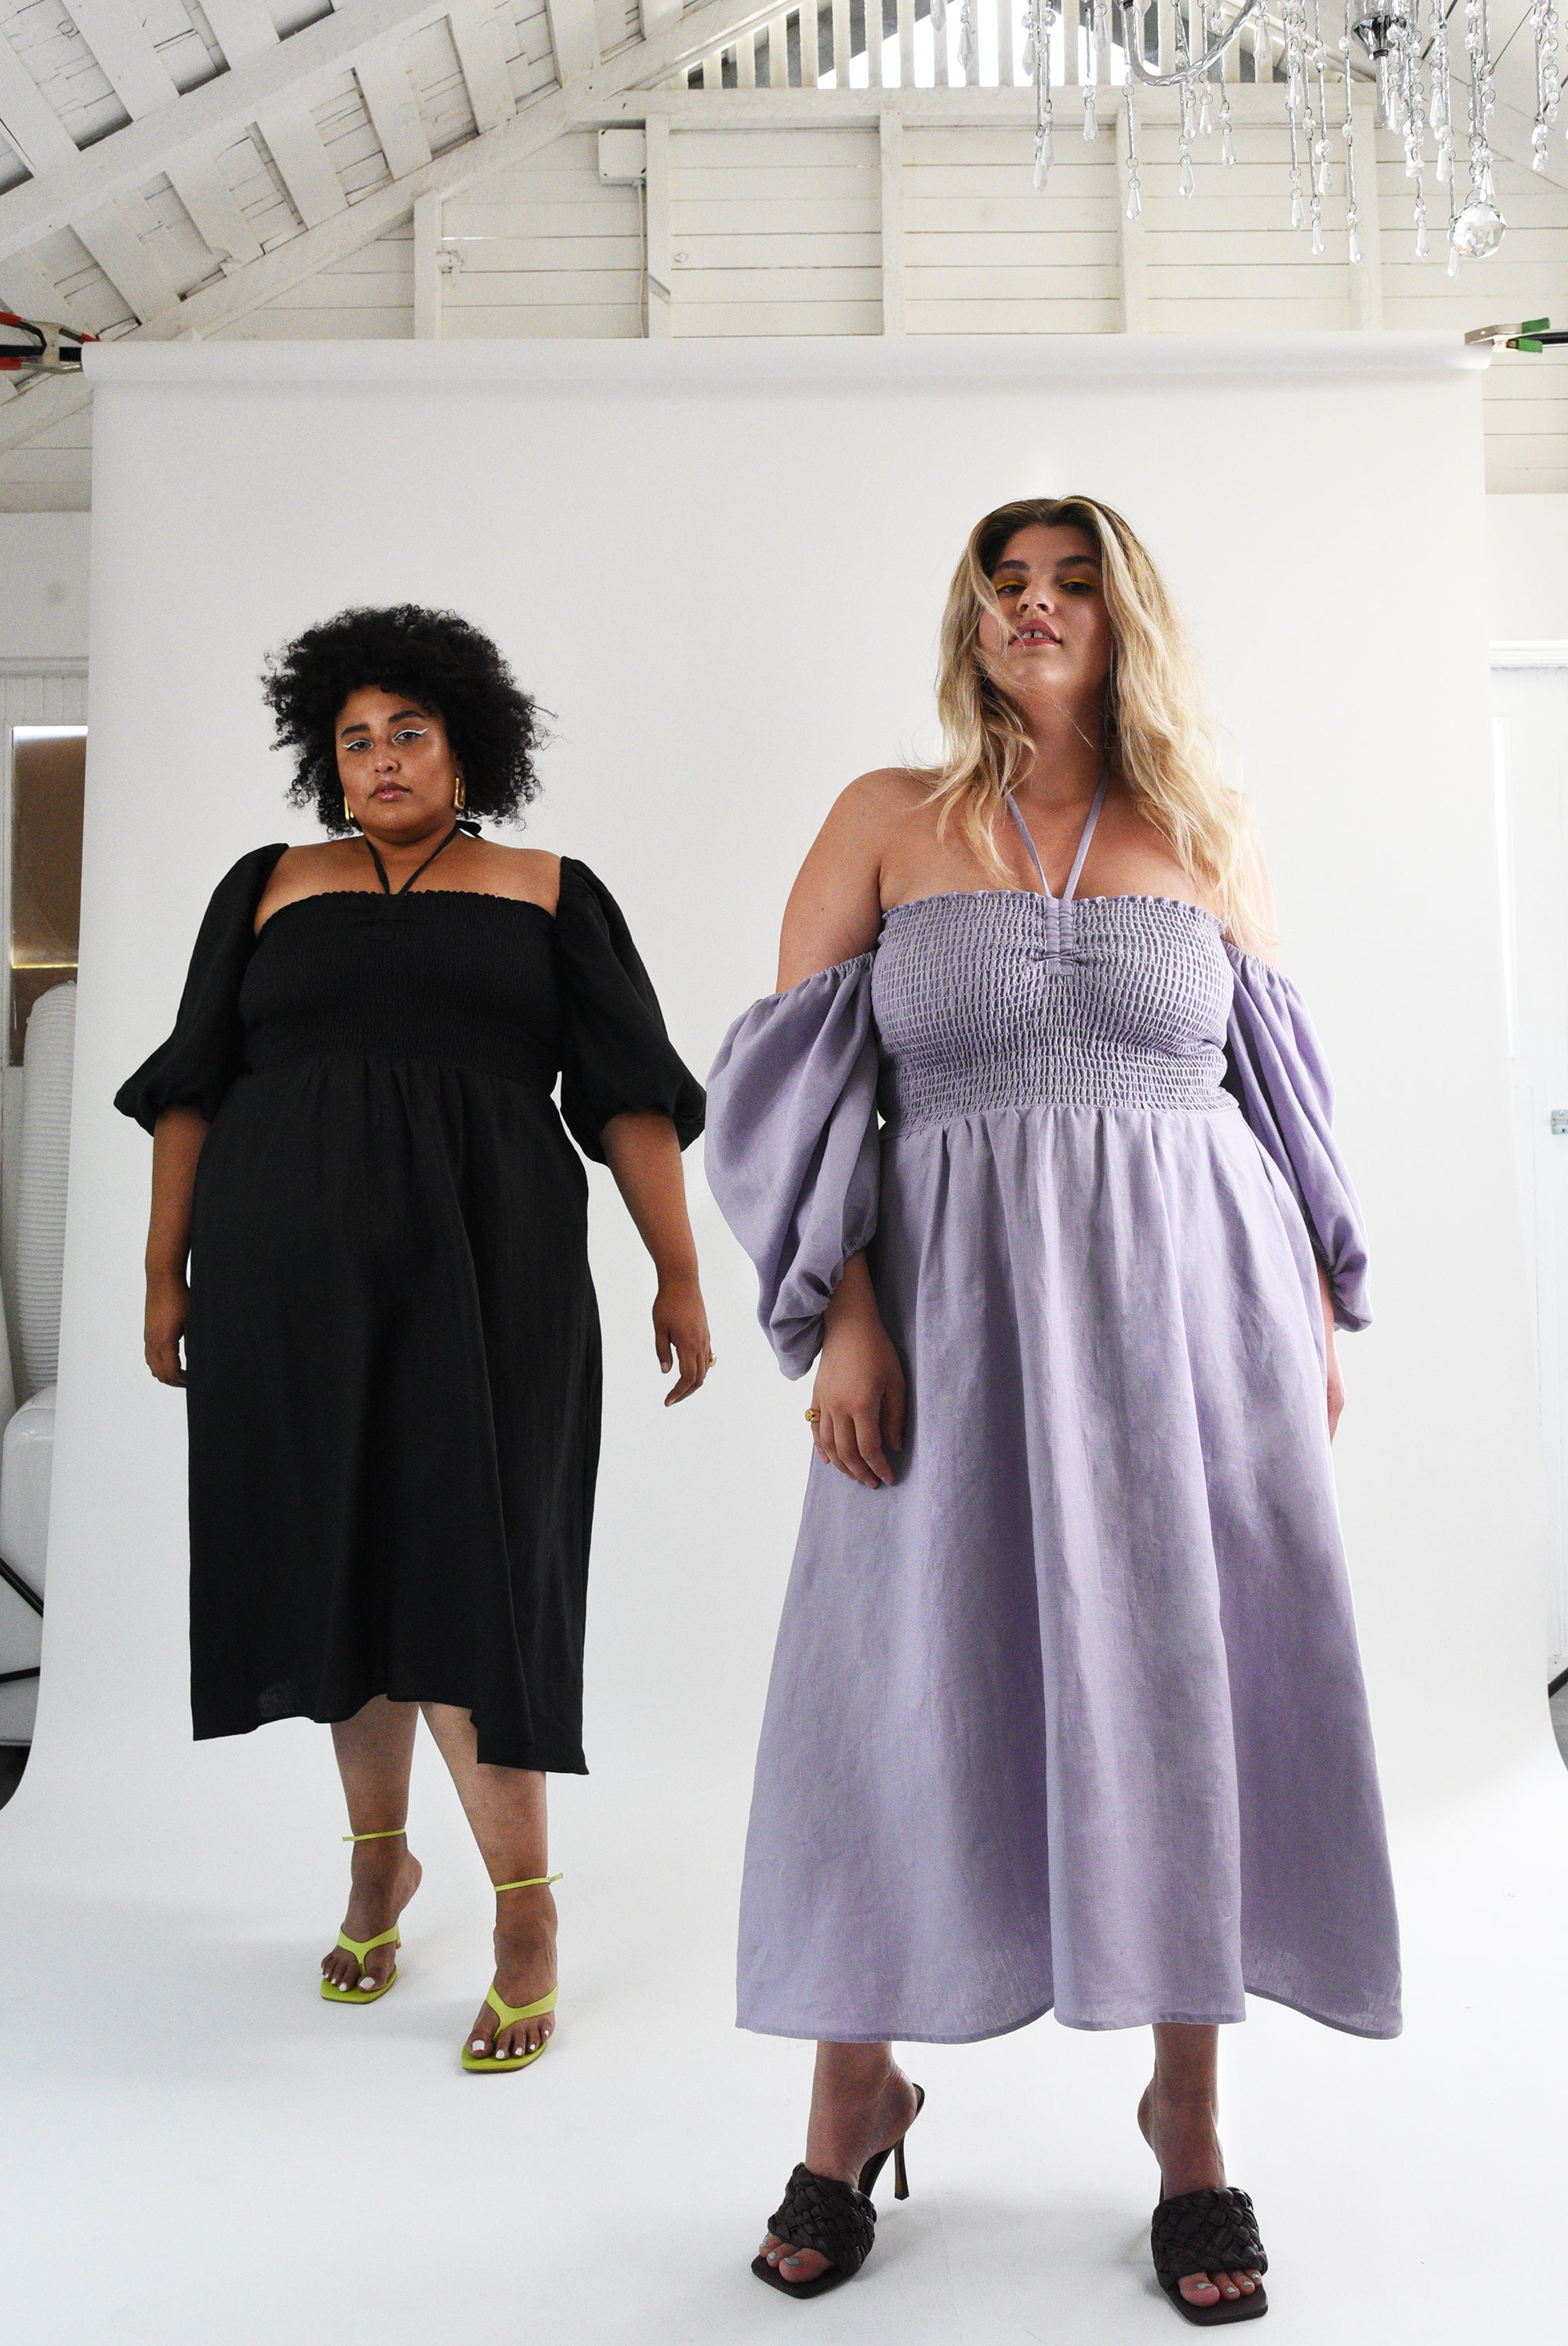 The Colette Dress in Lilac Linen  - Size Inclusive - Plus Size Dress